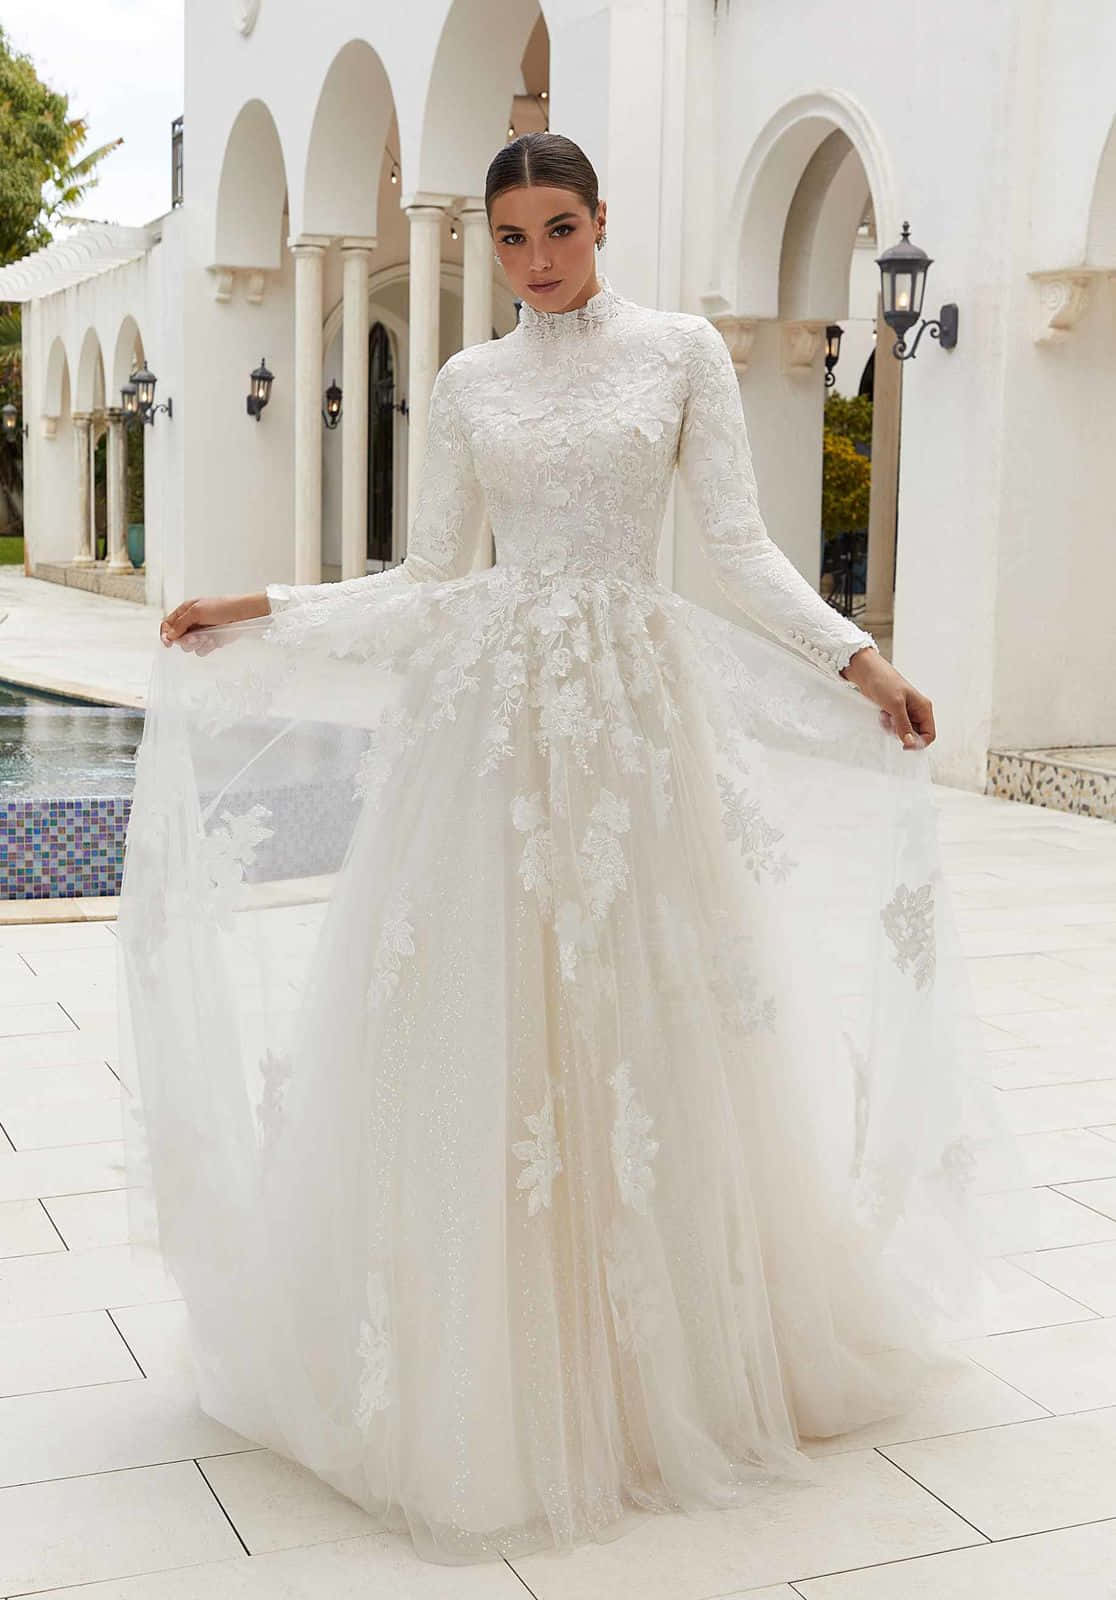 Radiate elegance and grace in this beautiful bride's dress. Wallpaper